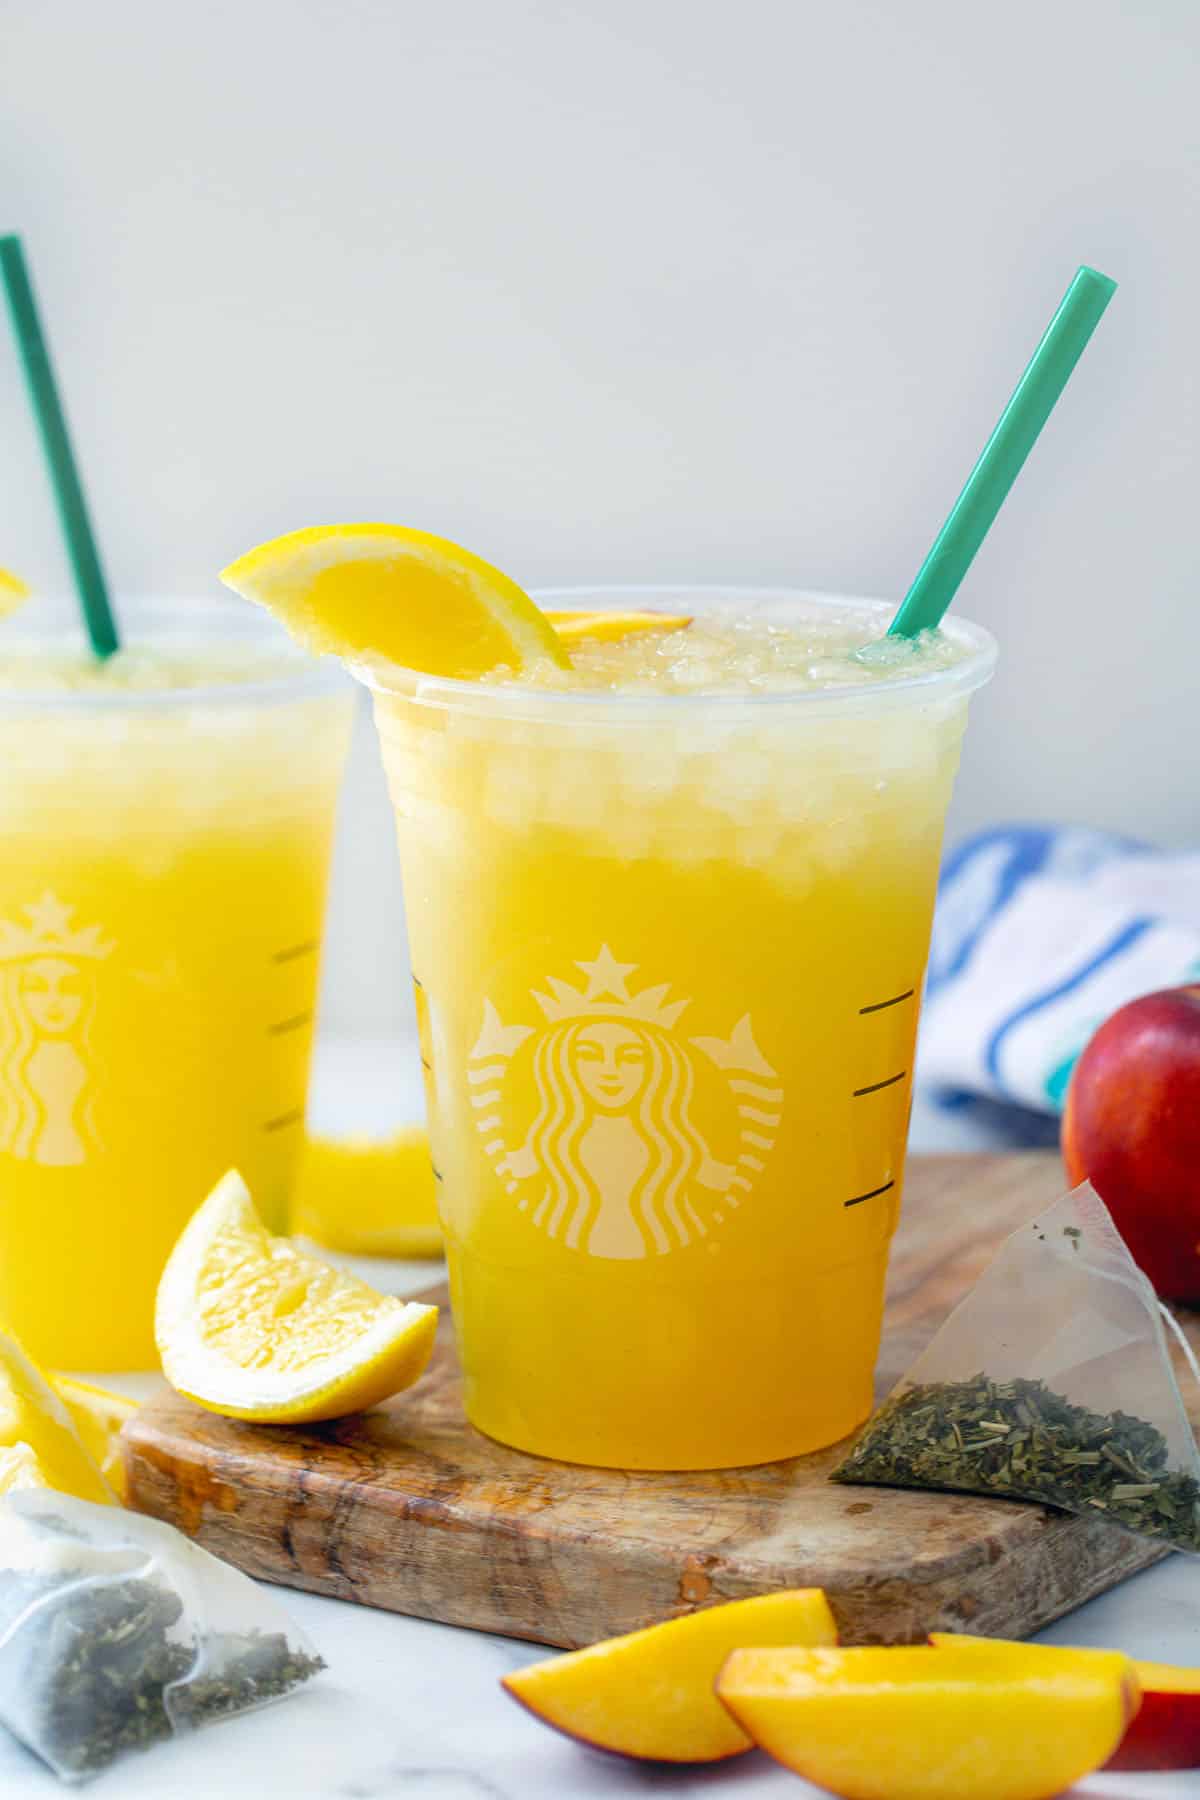 Starbucks Peach Green Tea Lemonade Recipe - Sweet Steep